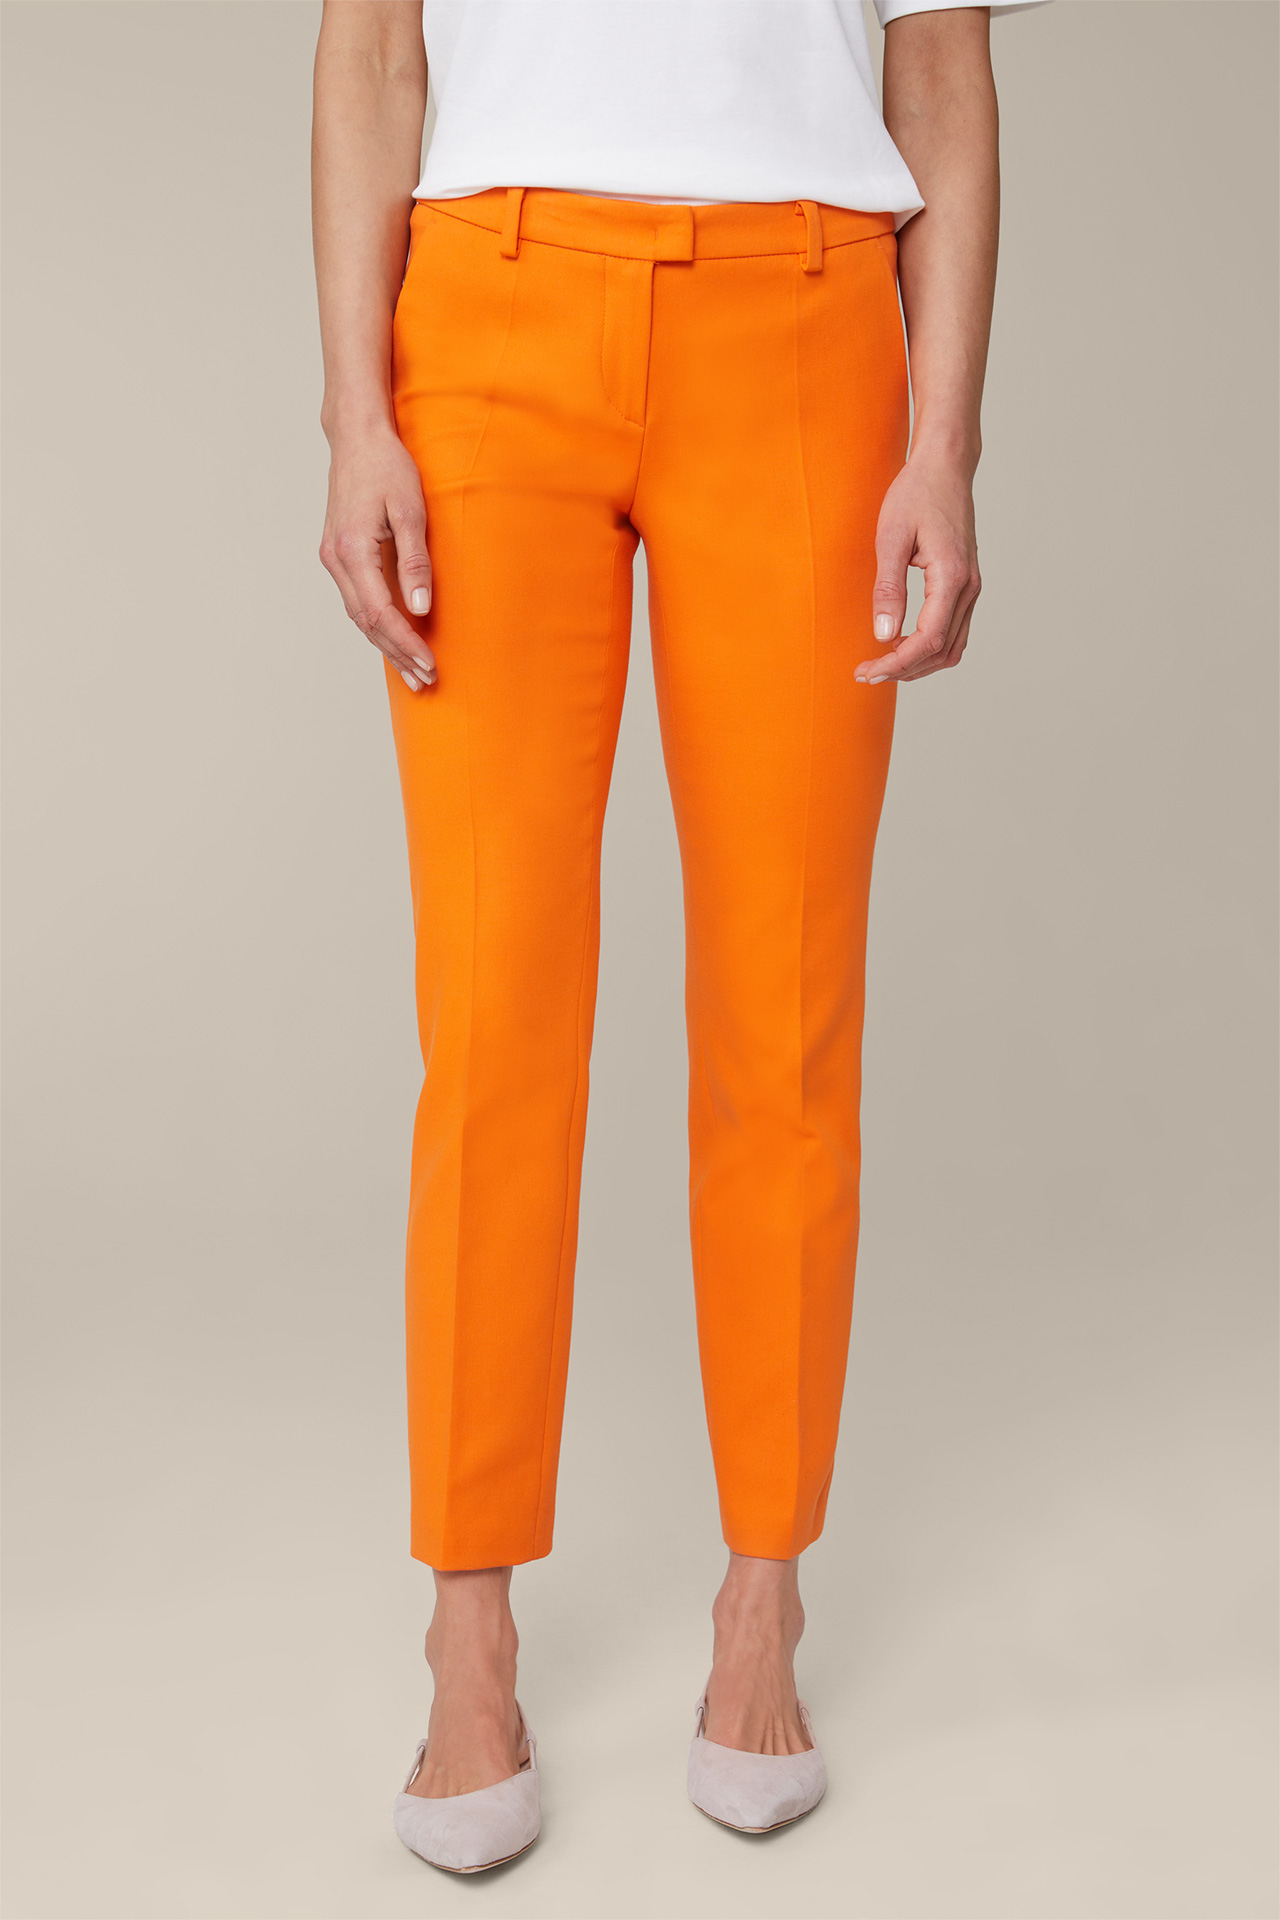 Baumwollstretch-Anzug-Hose in Panamabindung in Orange